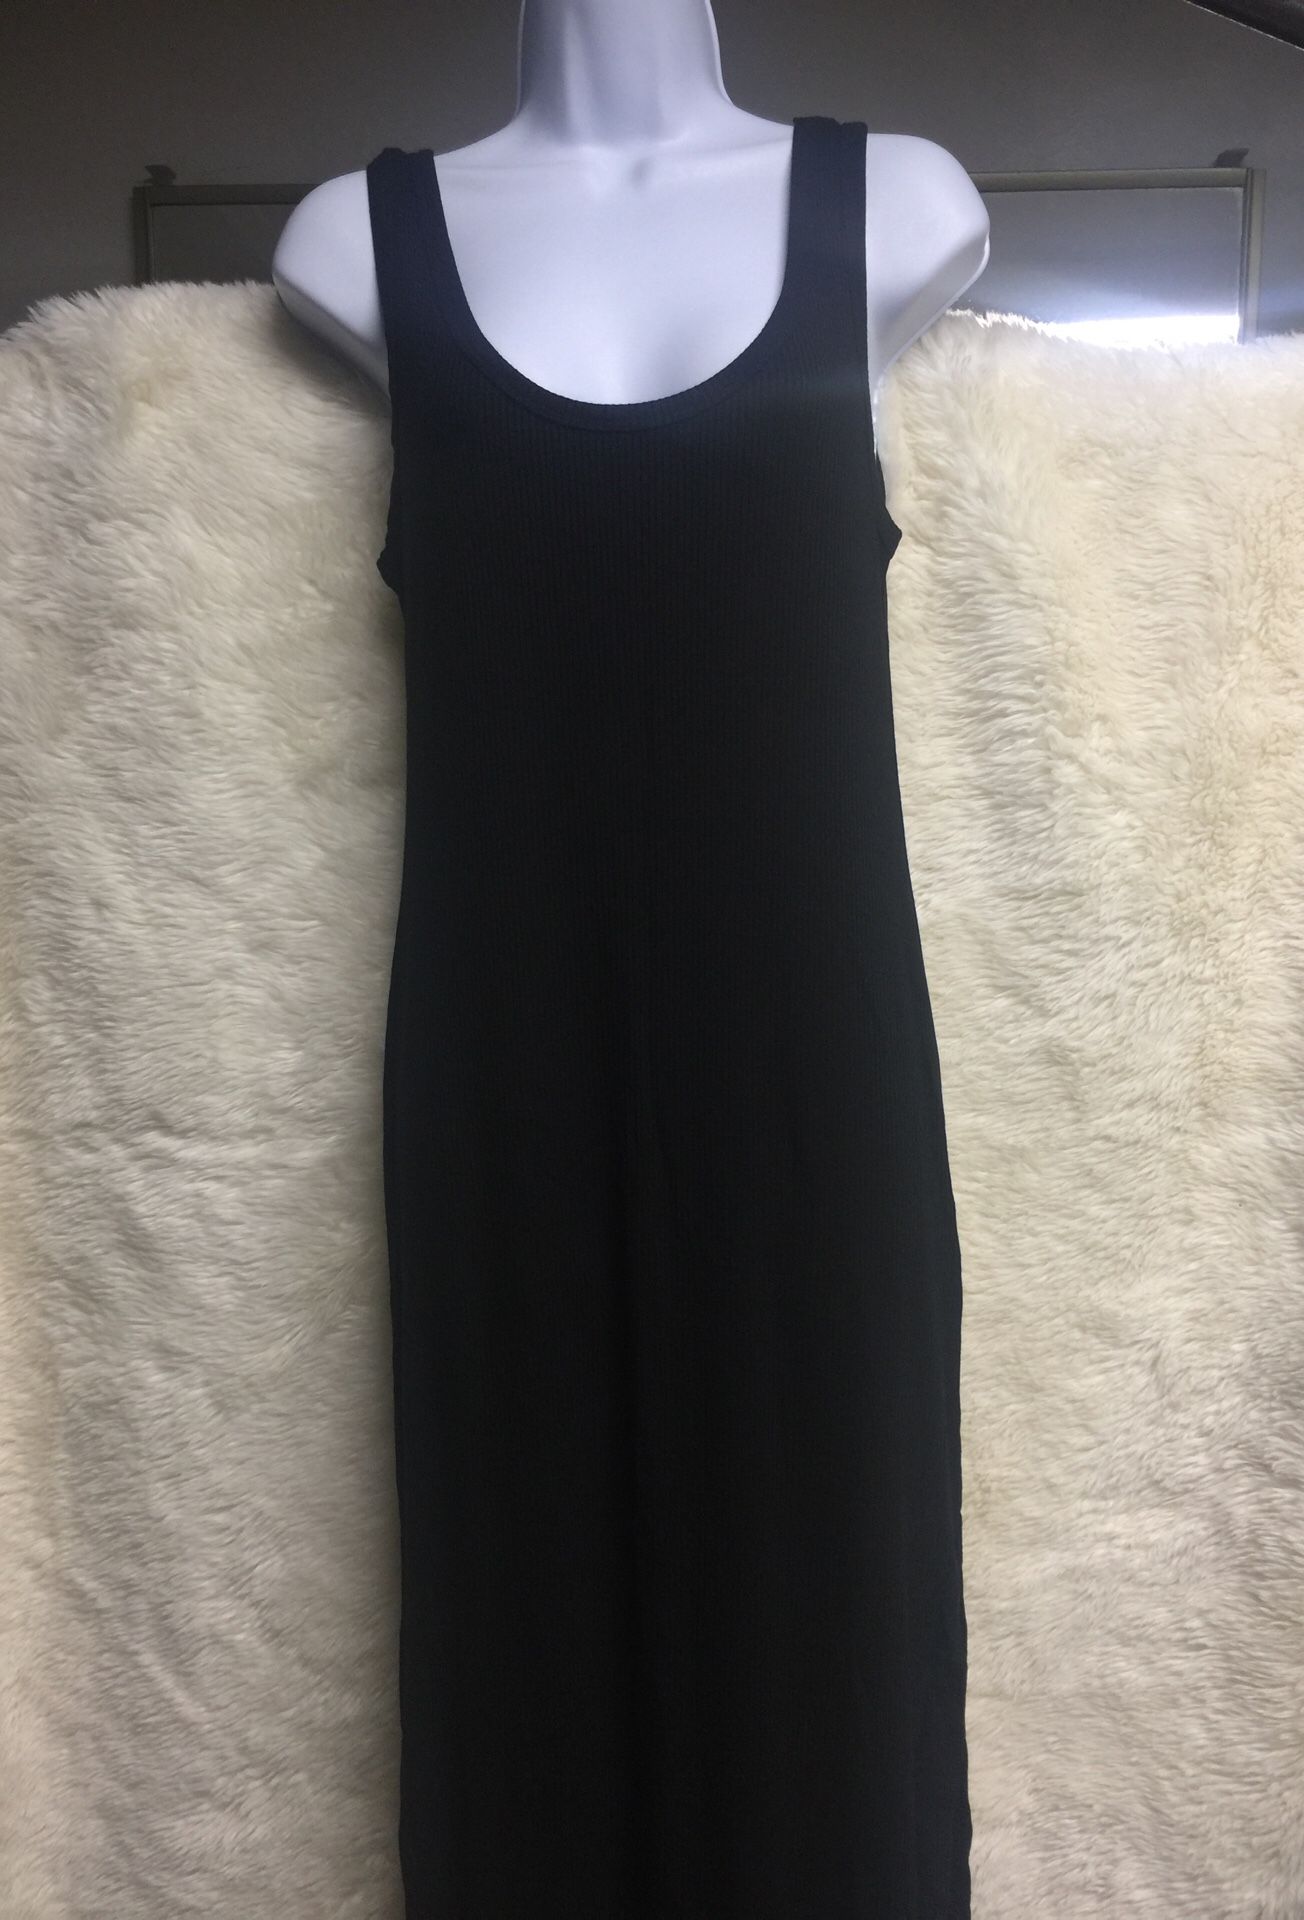 Large black maxi dress with slit